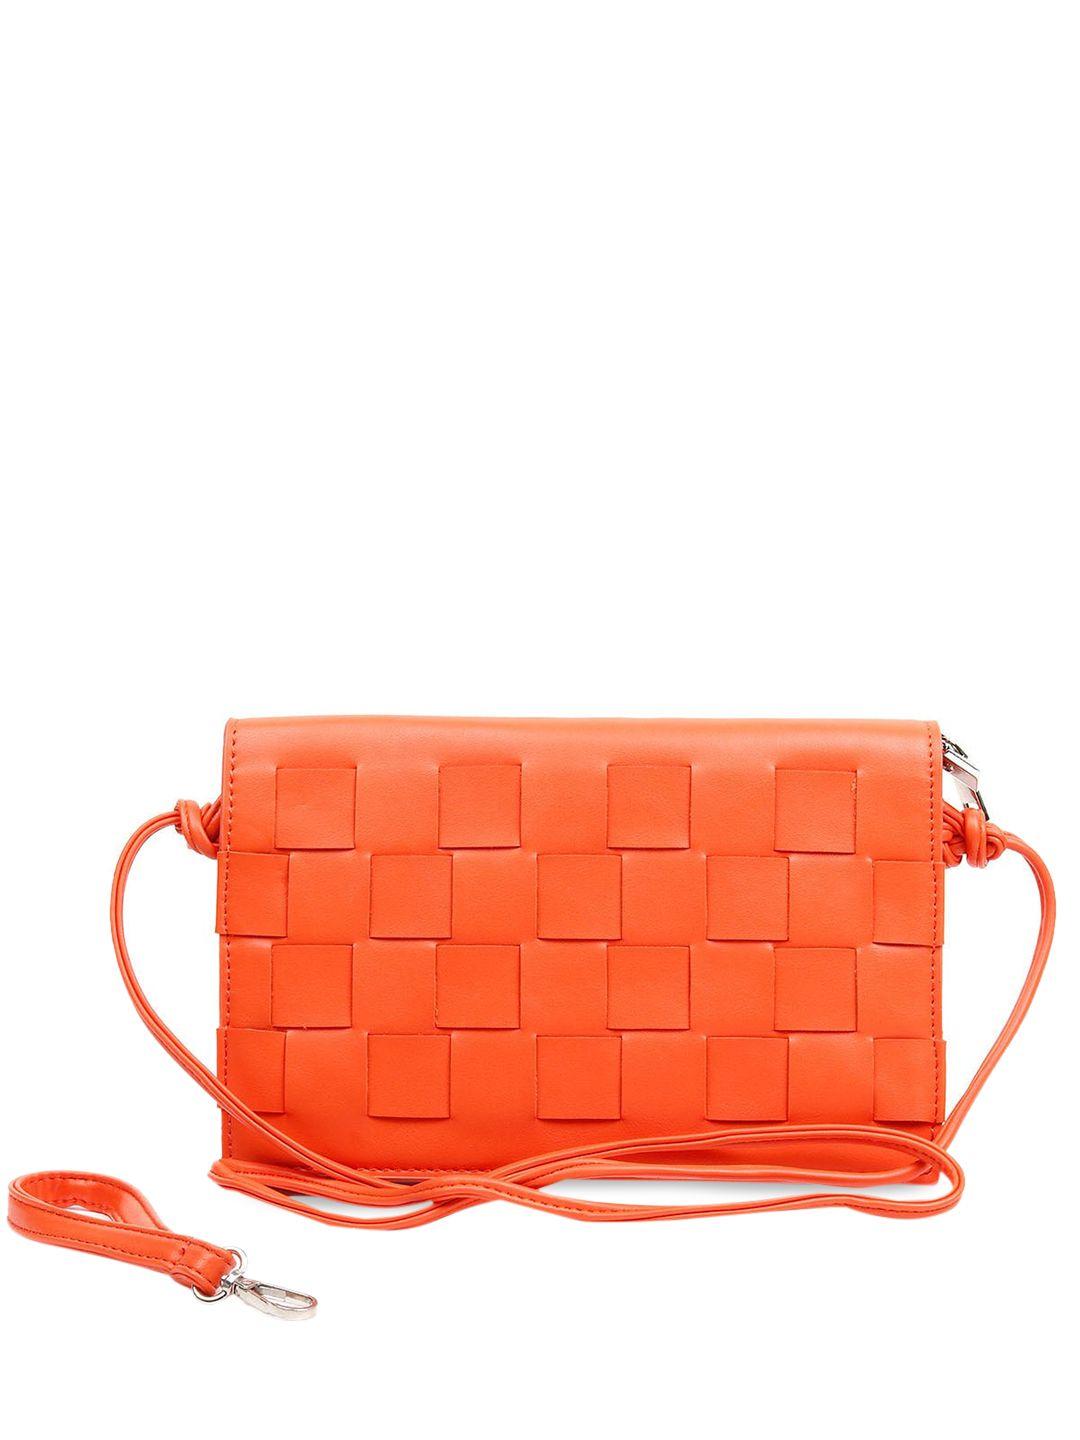 odette orange structured sling bag with quilted